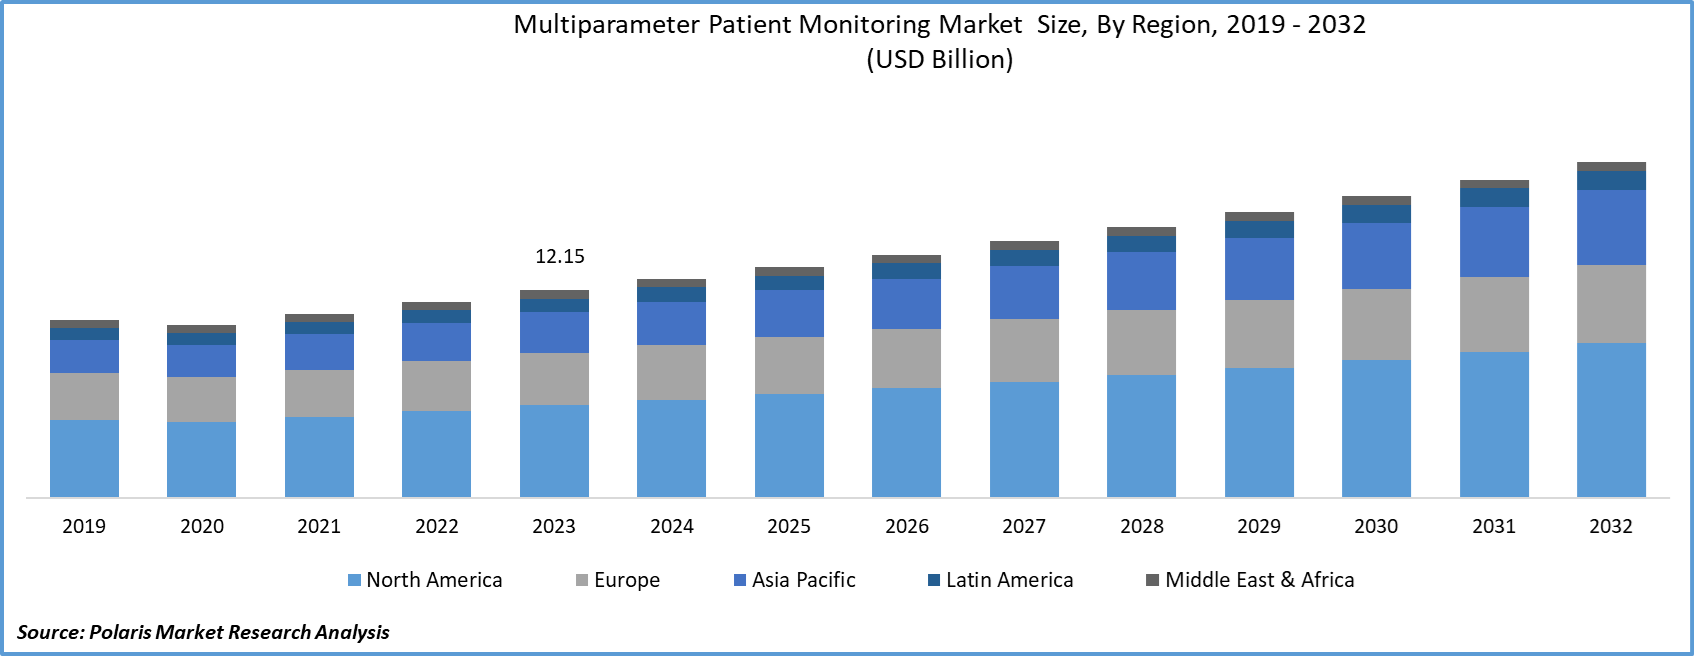 Multiparameter Patient Monitoring Market Size